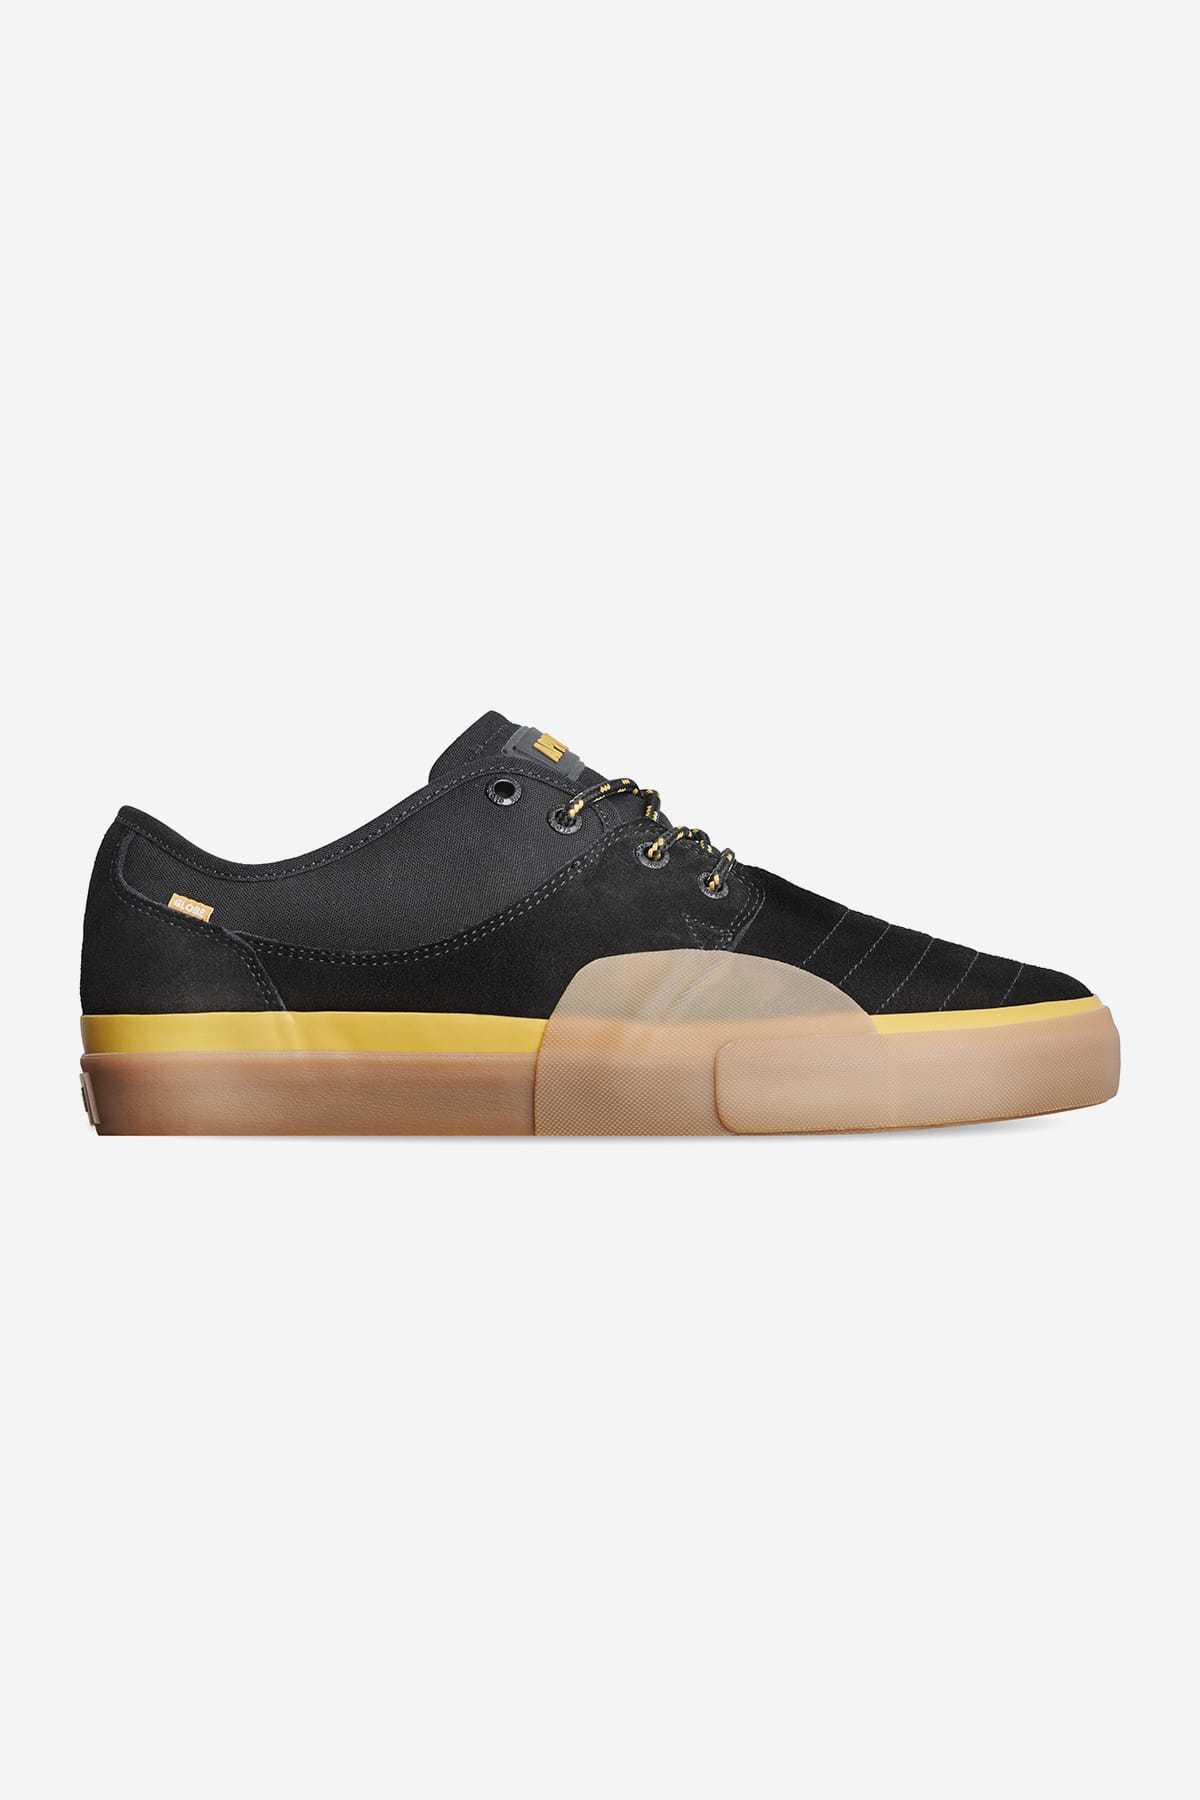 Globe - Mahalo Plus - Negro/Mustard - skateboard Zapatos